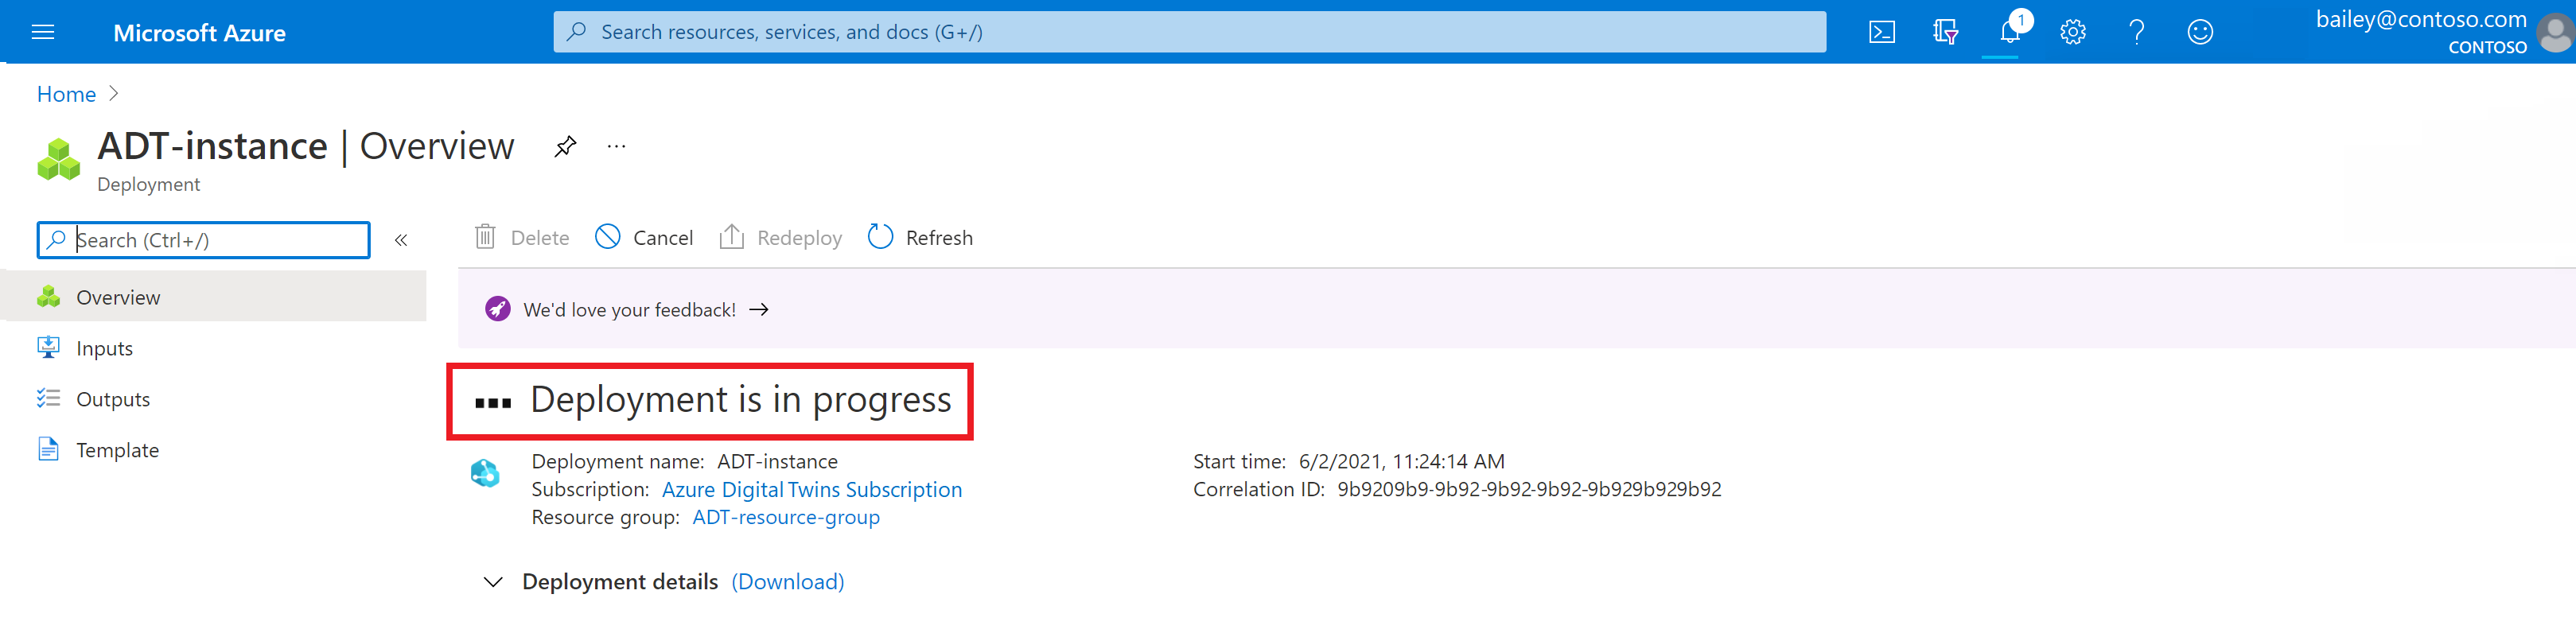 Снимок экрана: страница развертывания Azure Digital Twins в портал Azure. На странице указано, что развертывание выполняется.